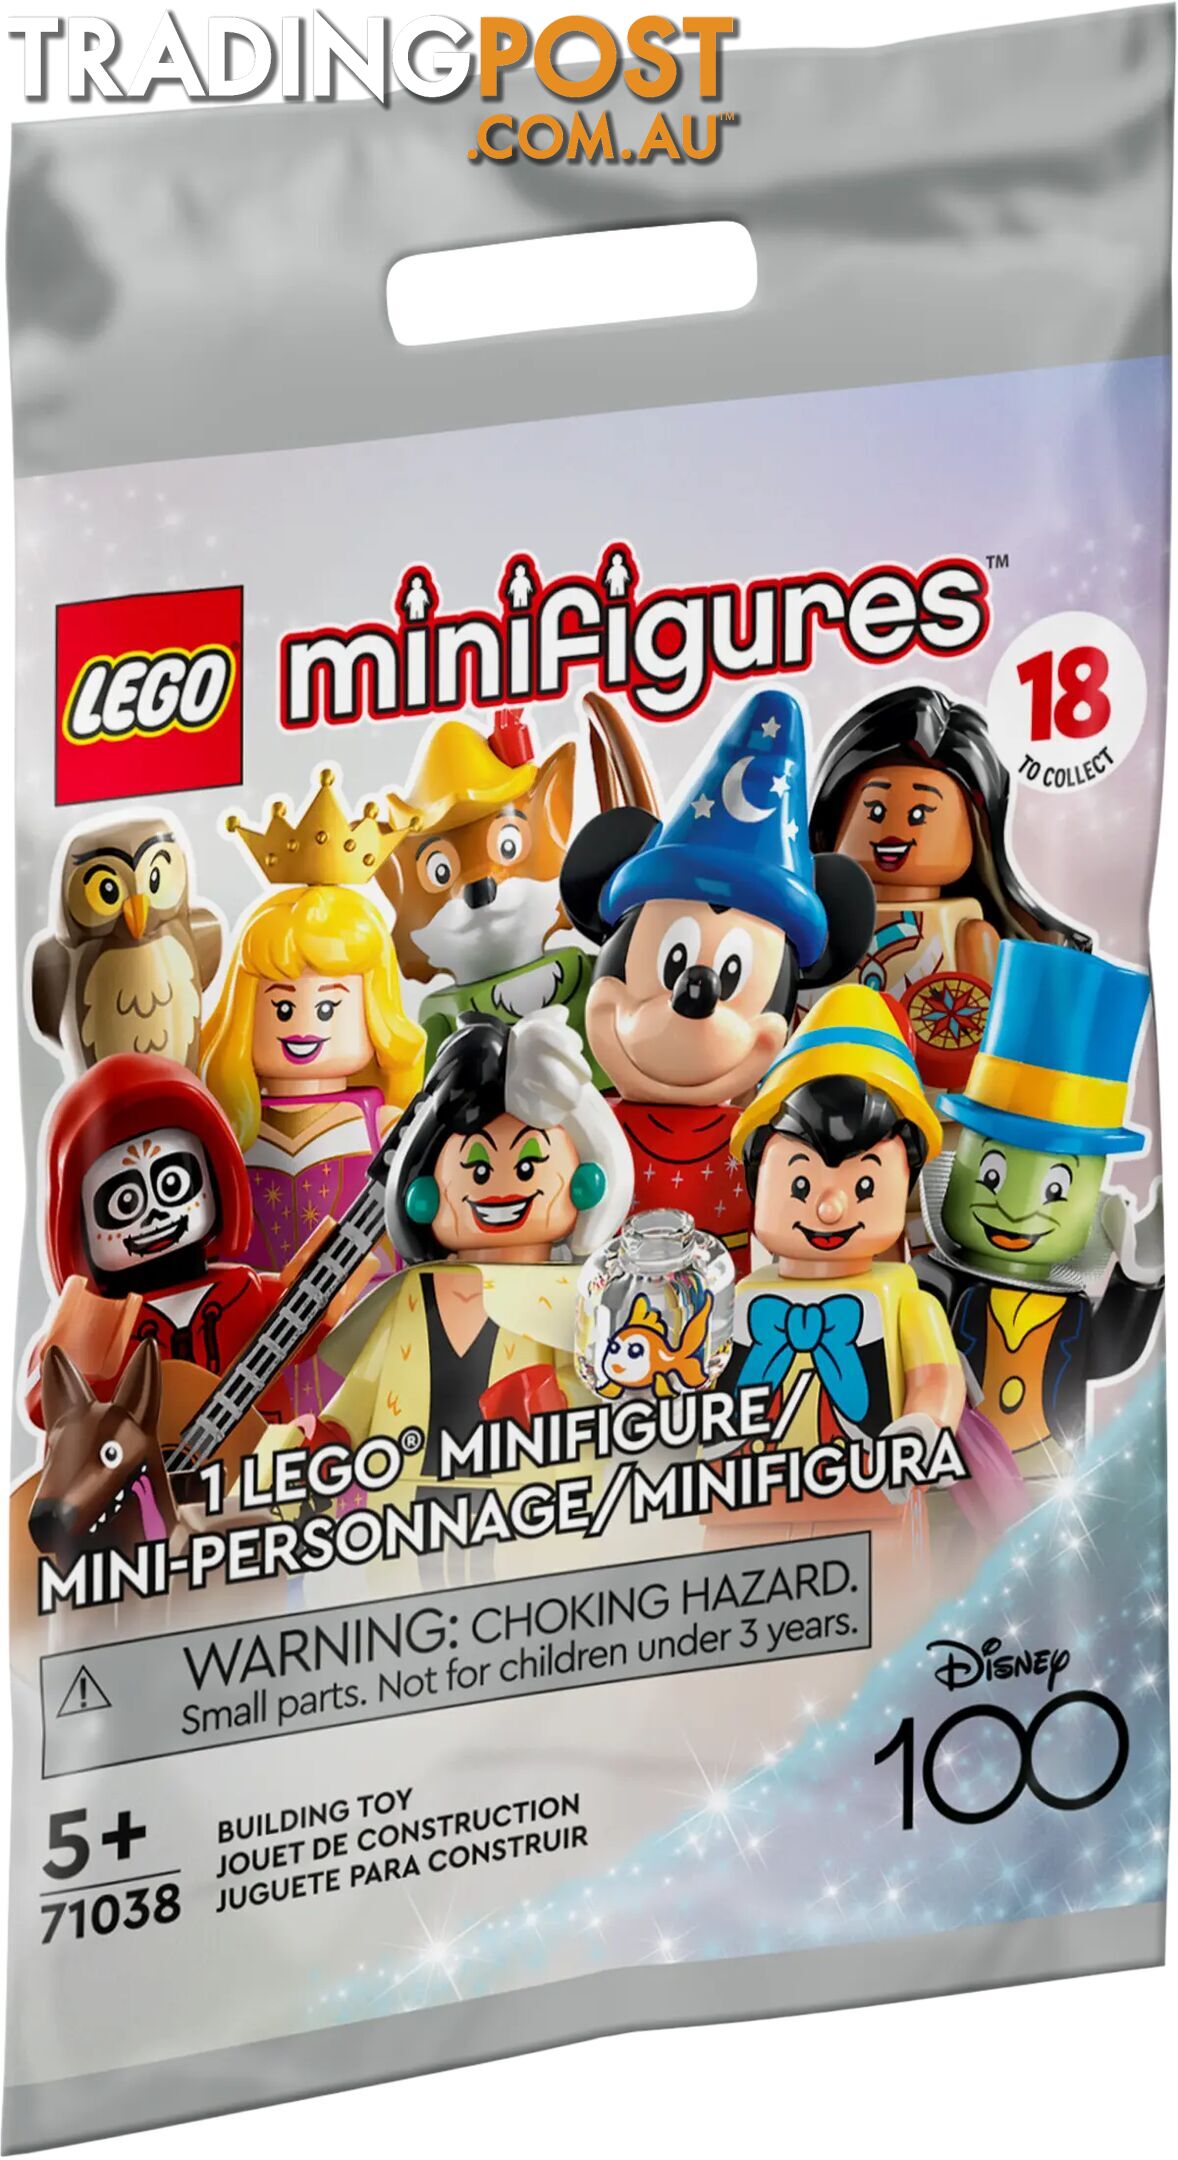 LEGO 71038 Minifigures Disney 100 - Minifigures - 5702017417813